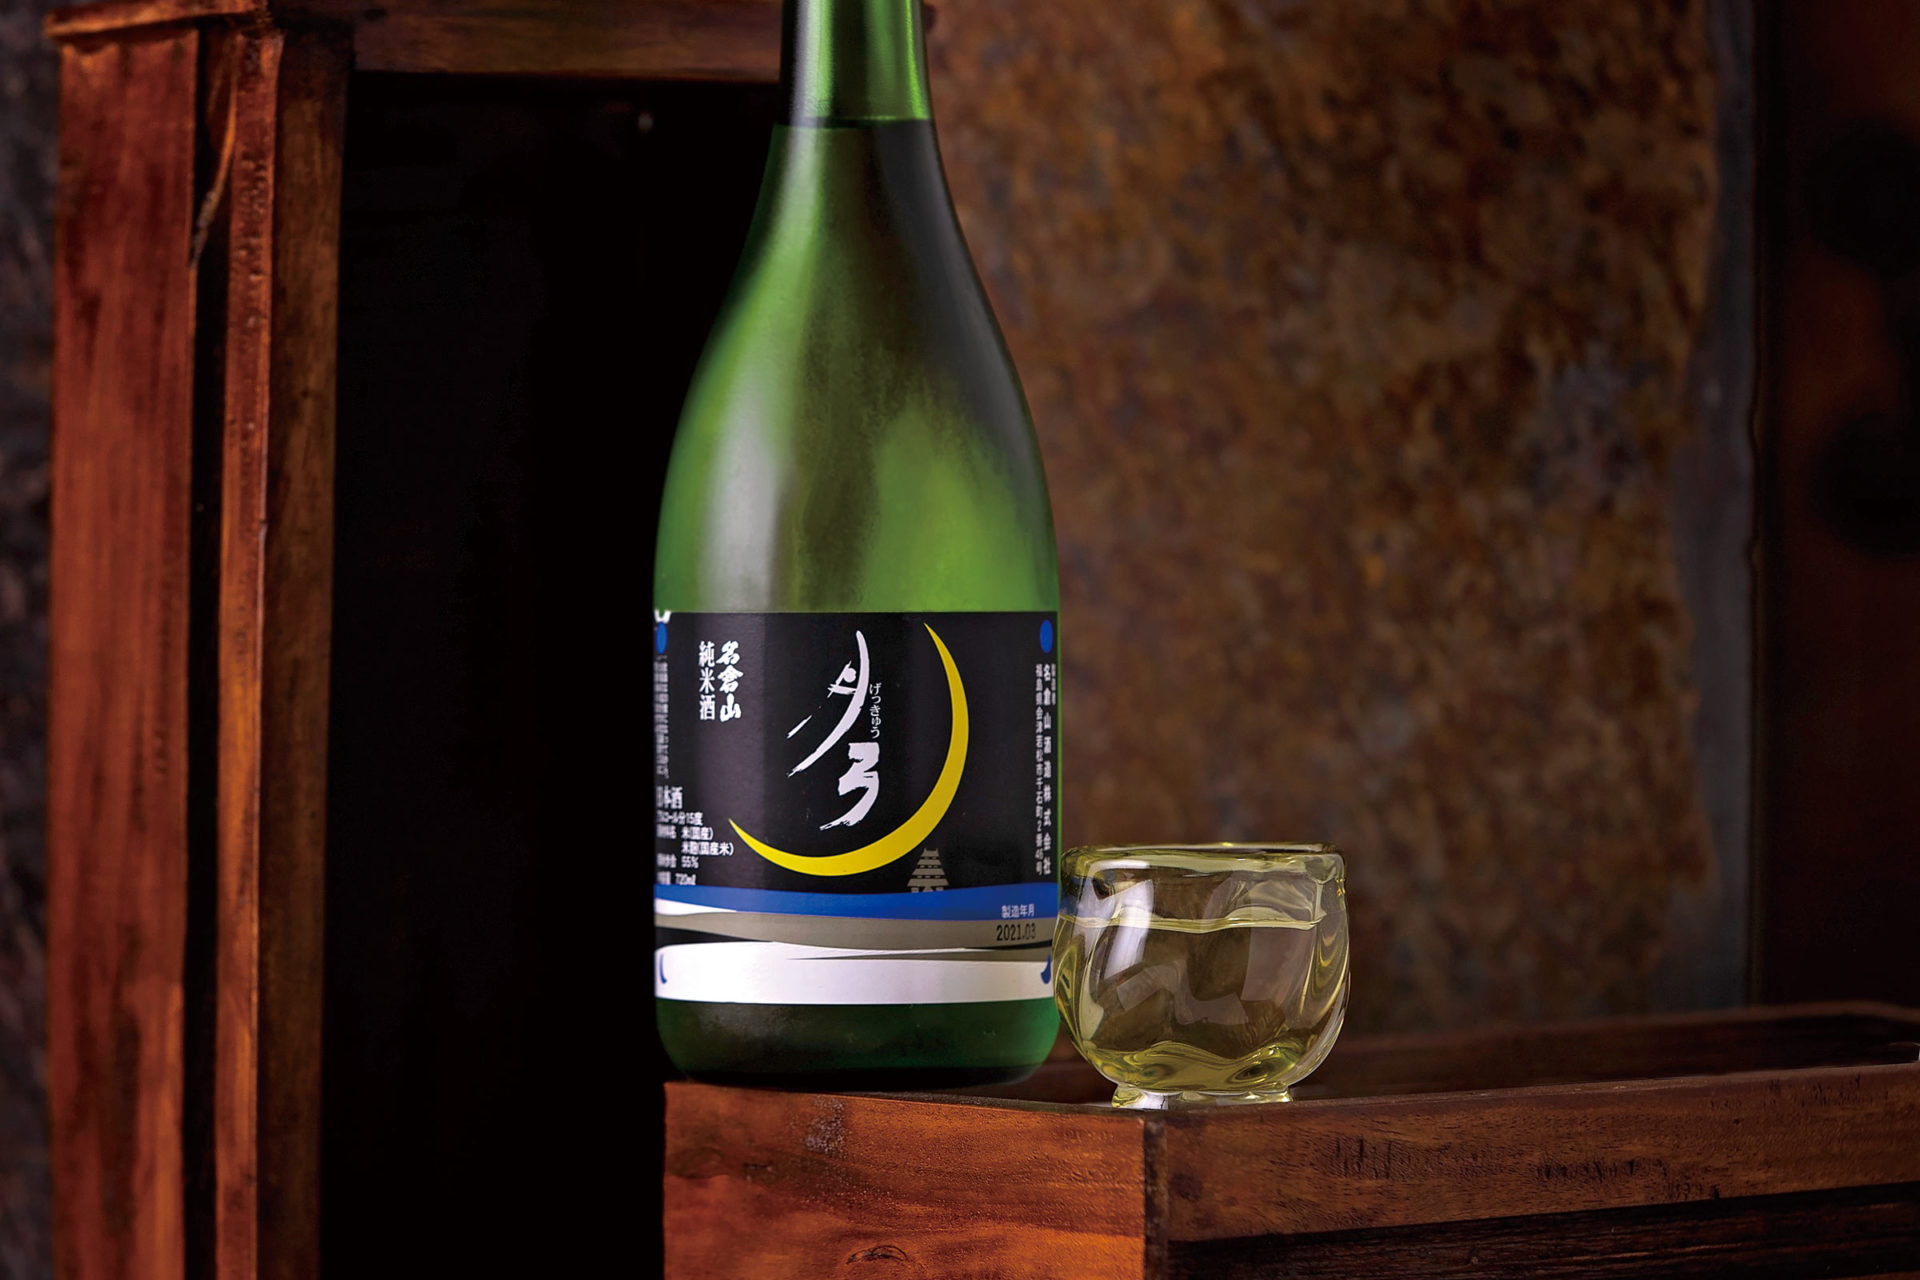 Nagurayama “Gekkyu” bottle